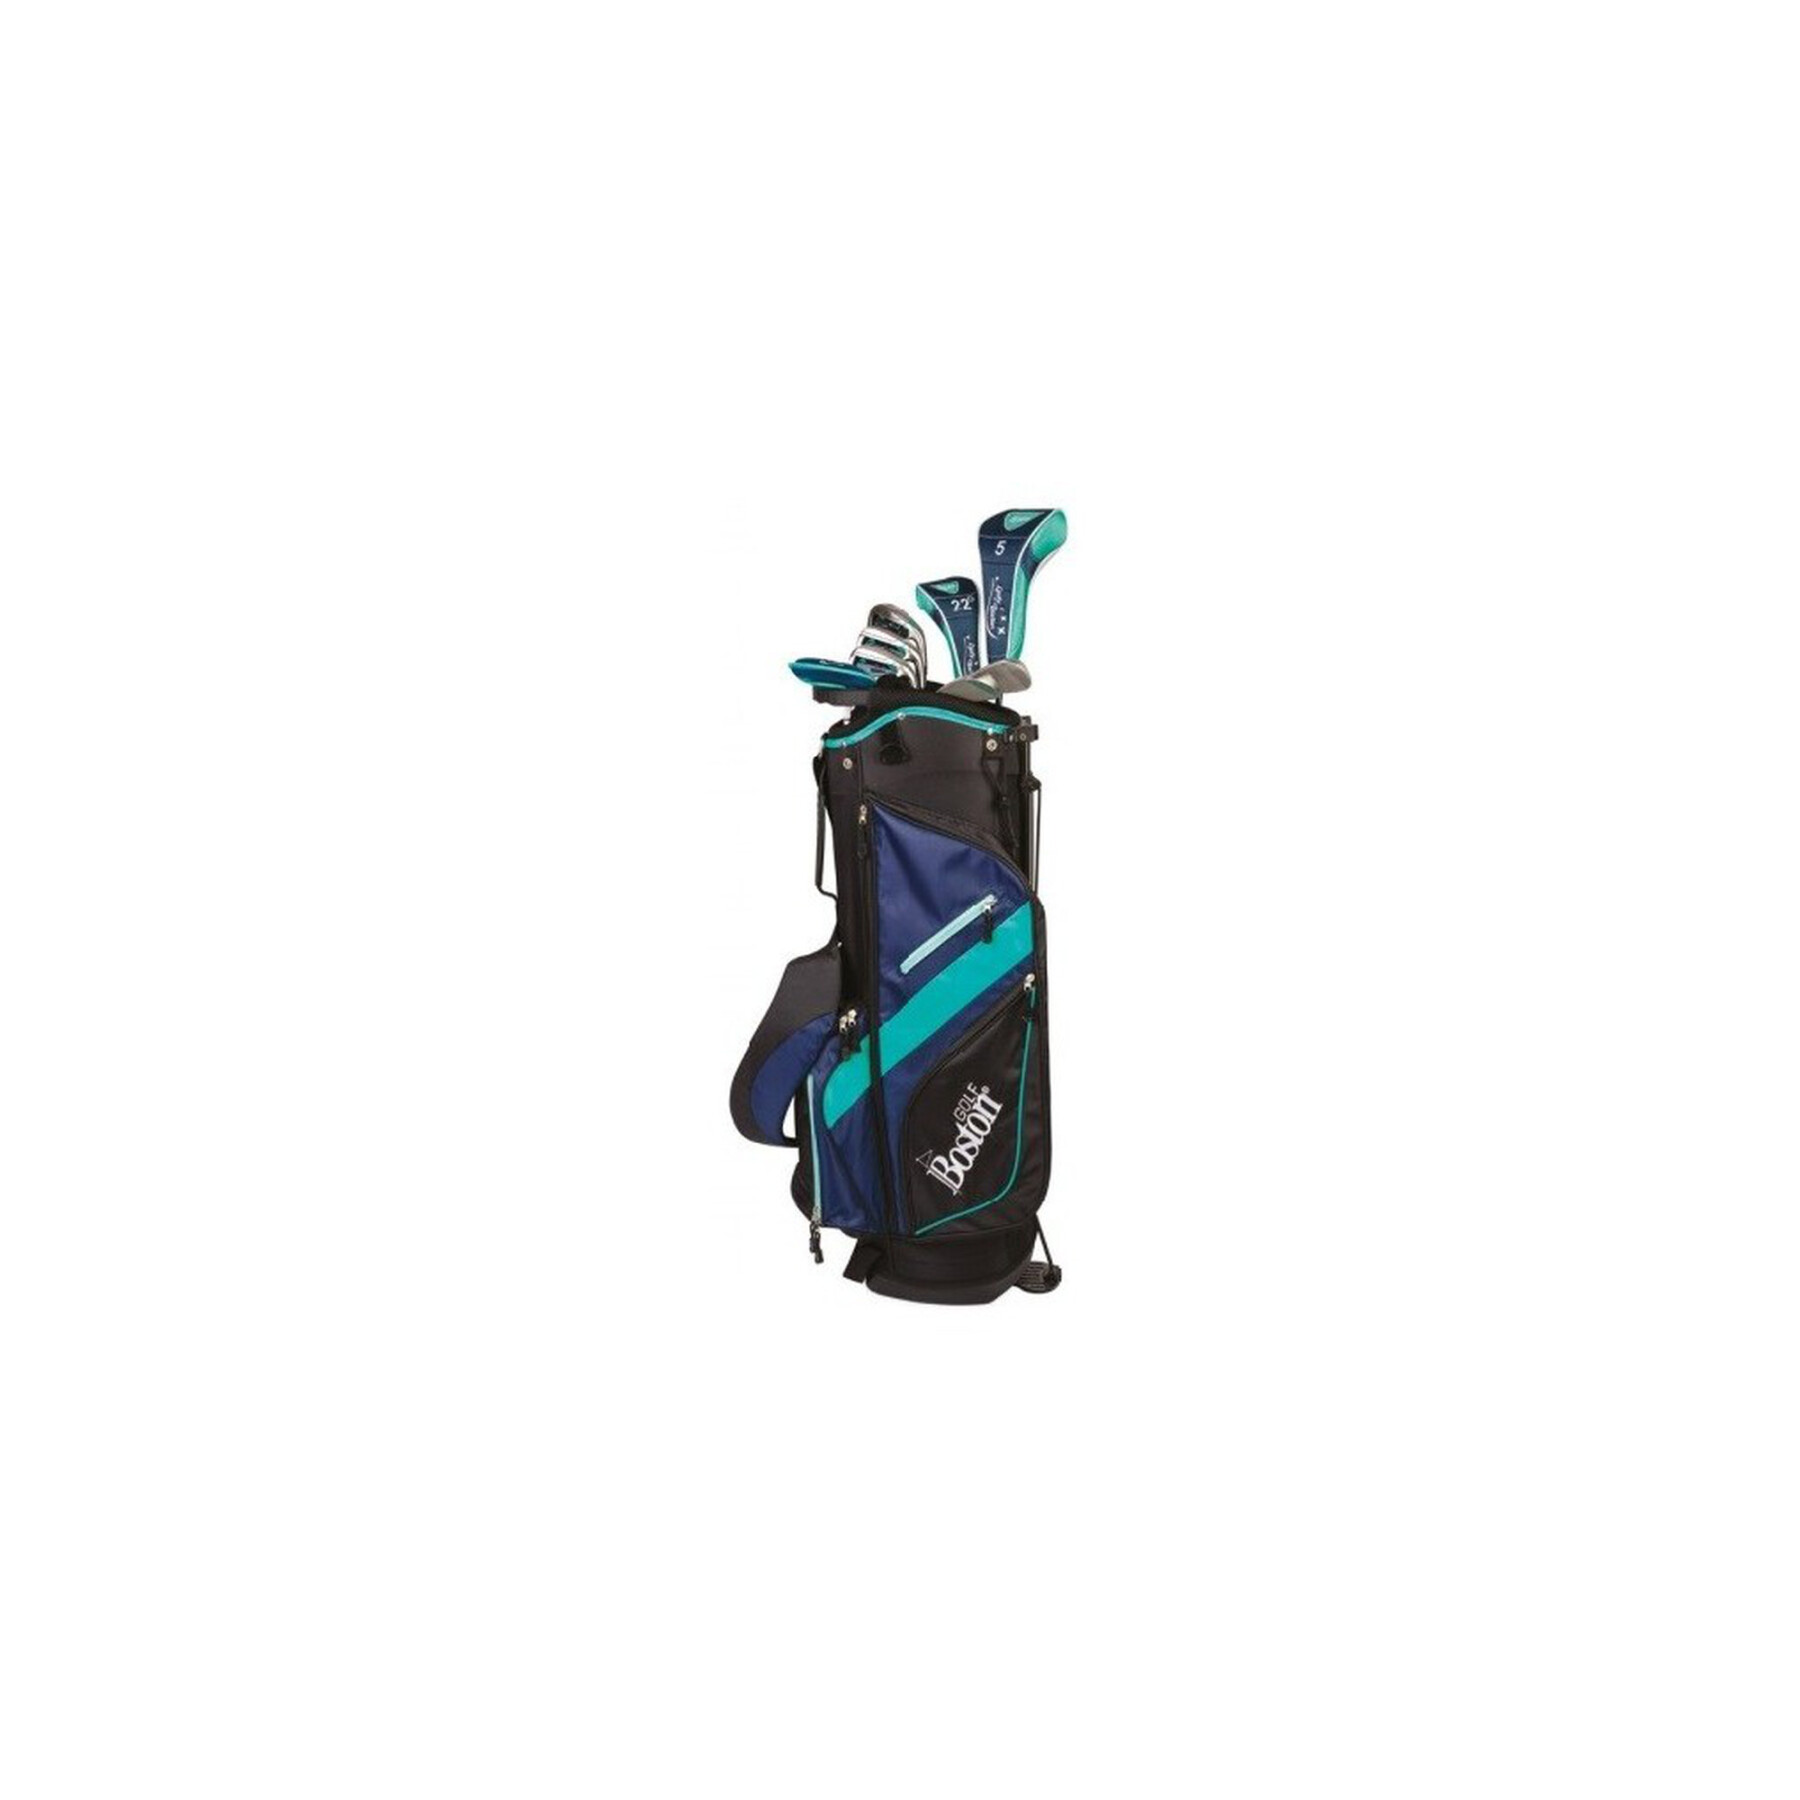 Kit (tas + 11 clubs) rechtshandige vrouw Boston Golf canberra 8.5" 1/2 série